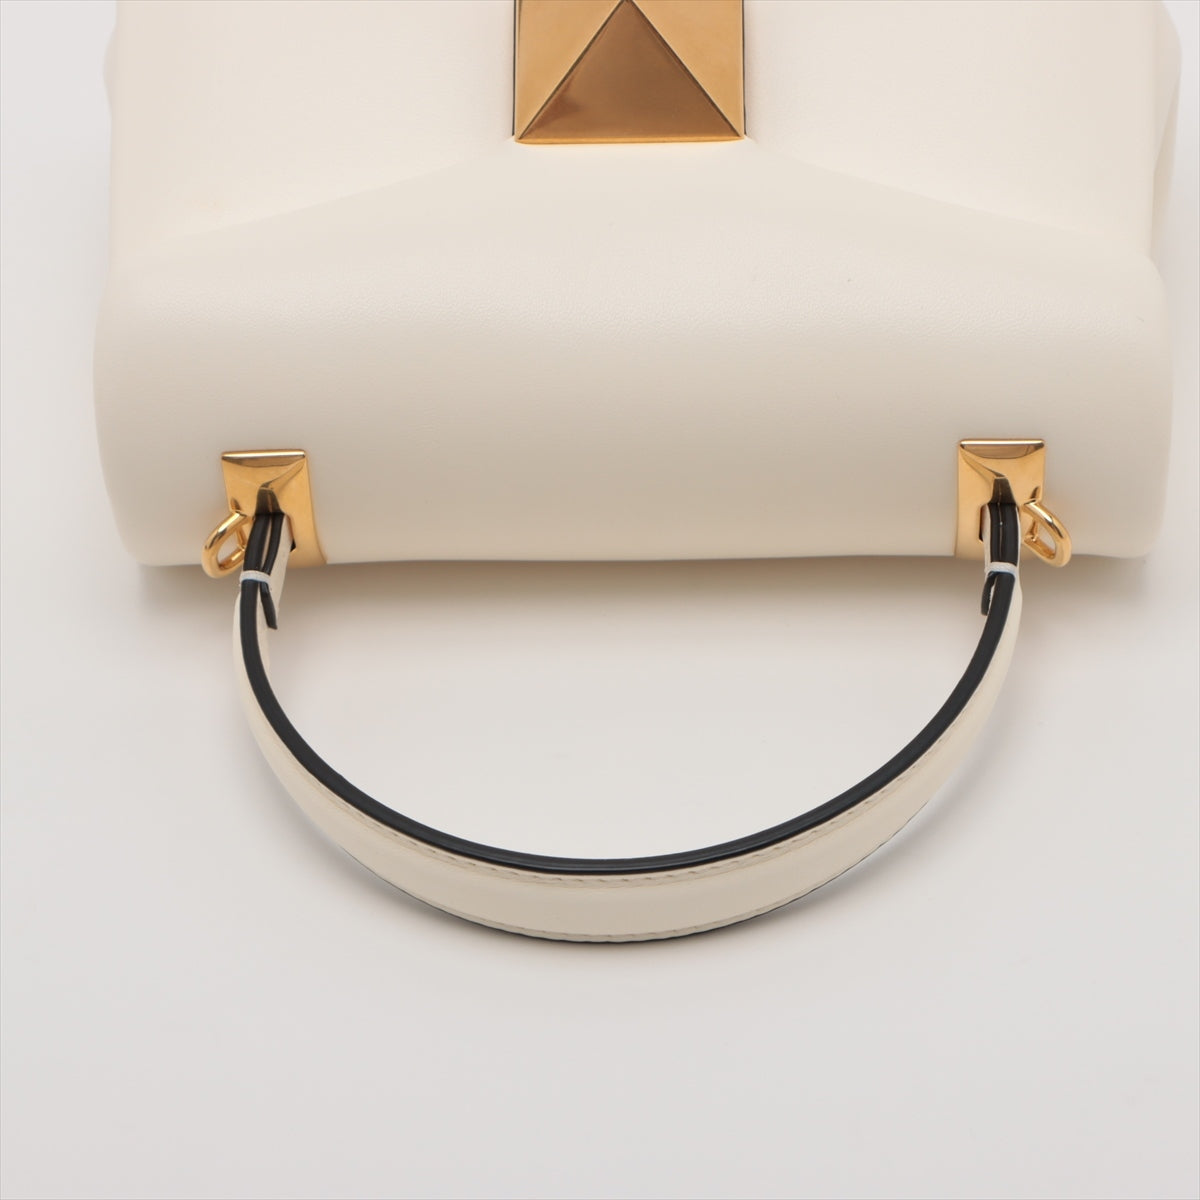 Valentino Garavani One Studs Leather 2way handbag White